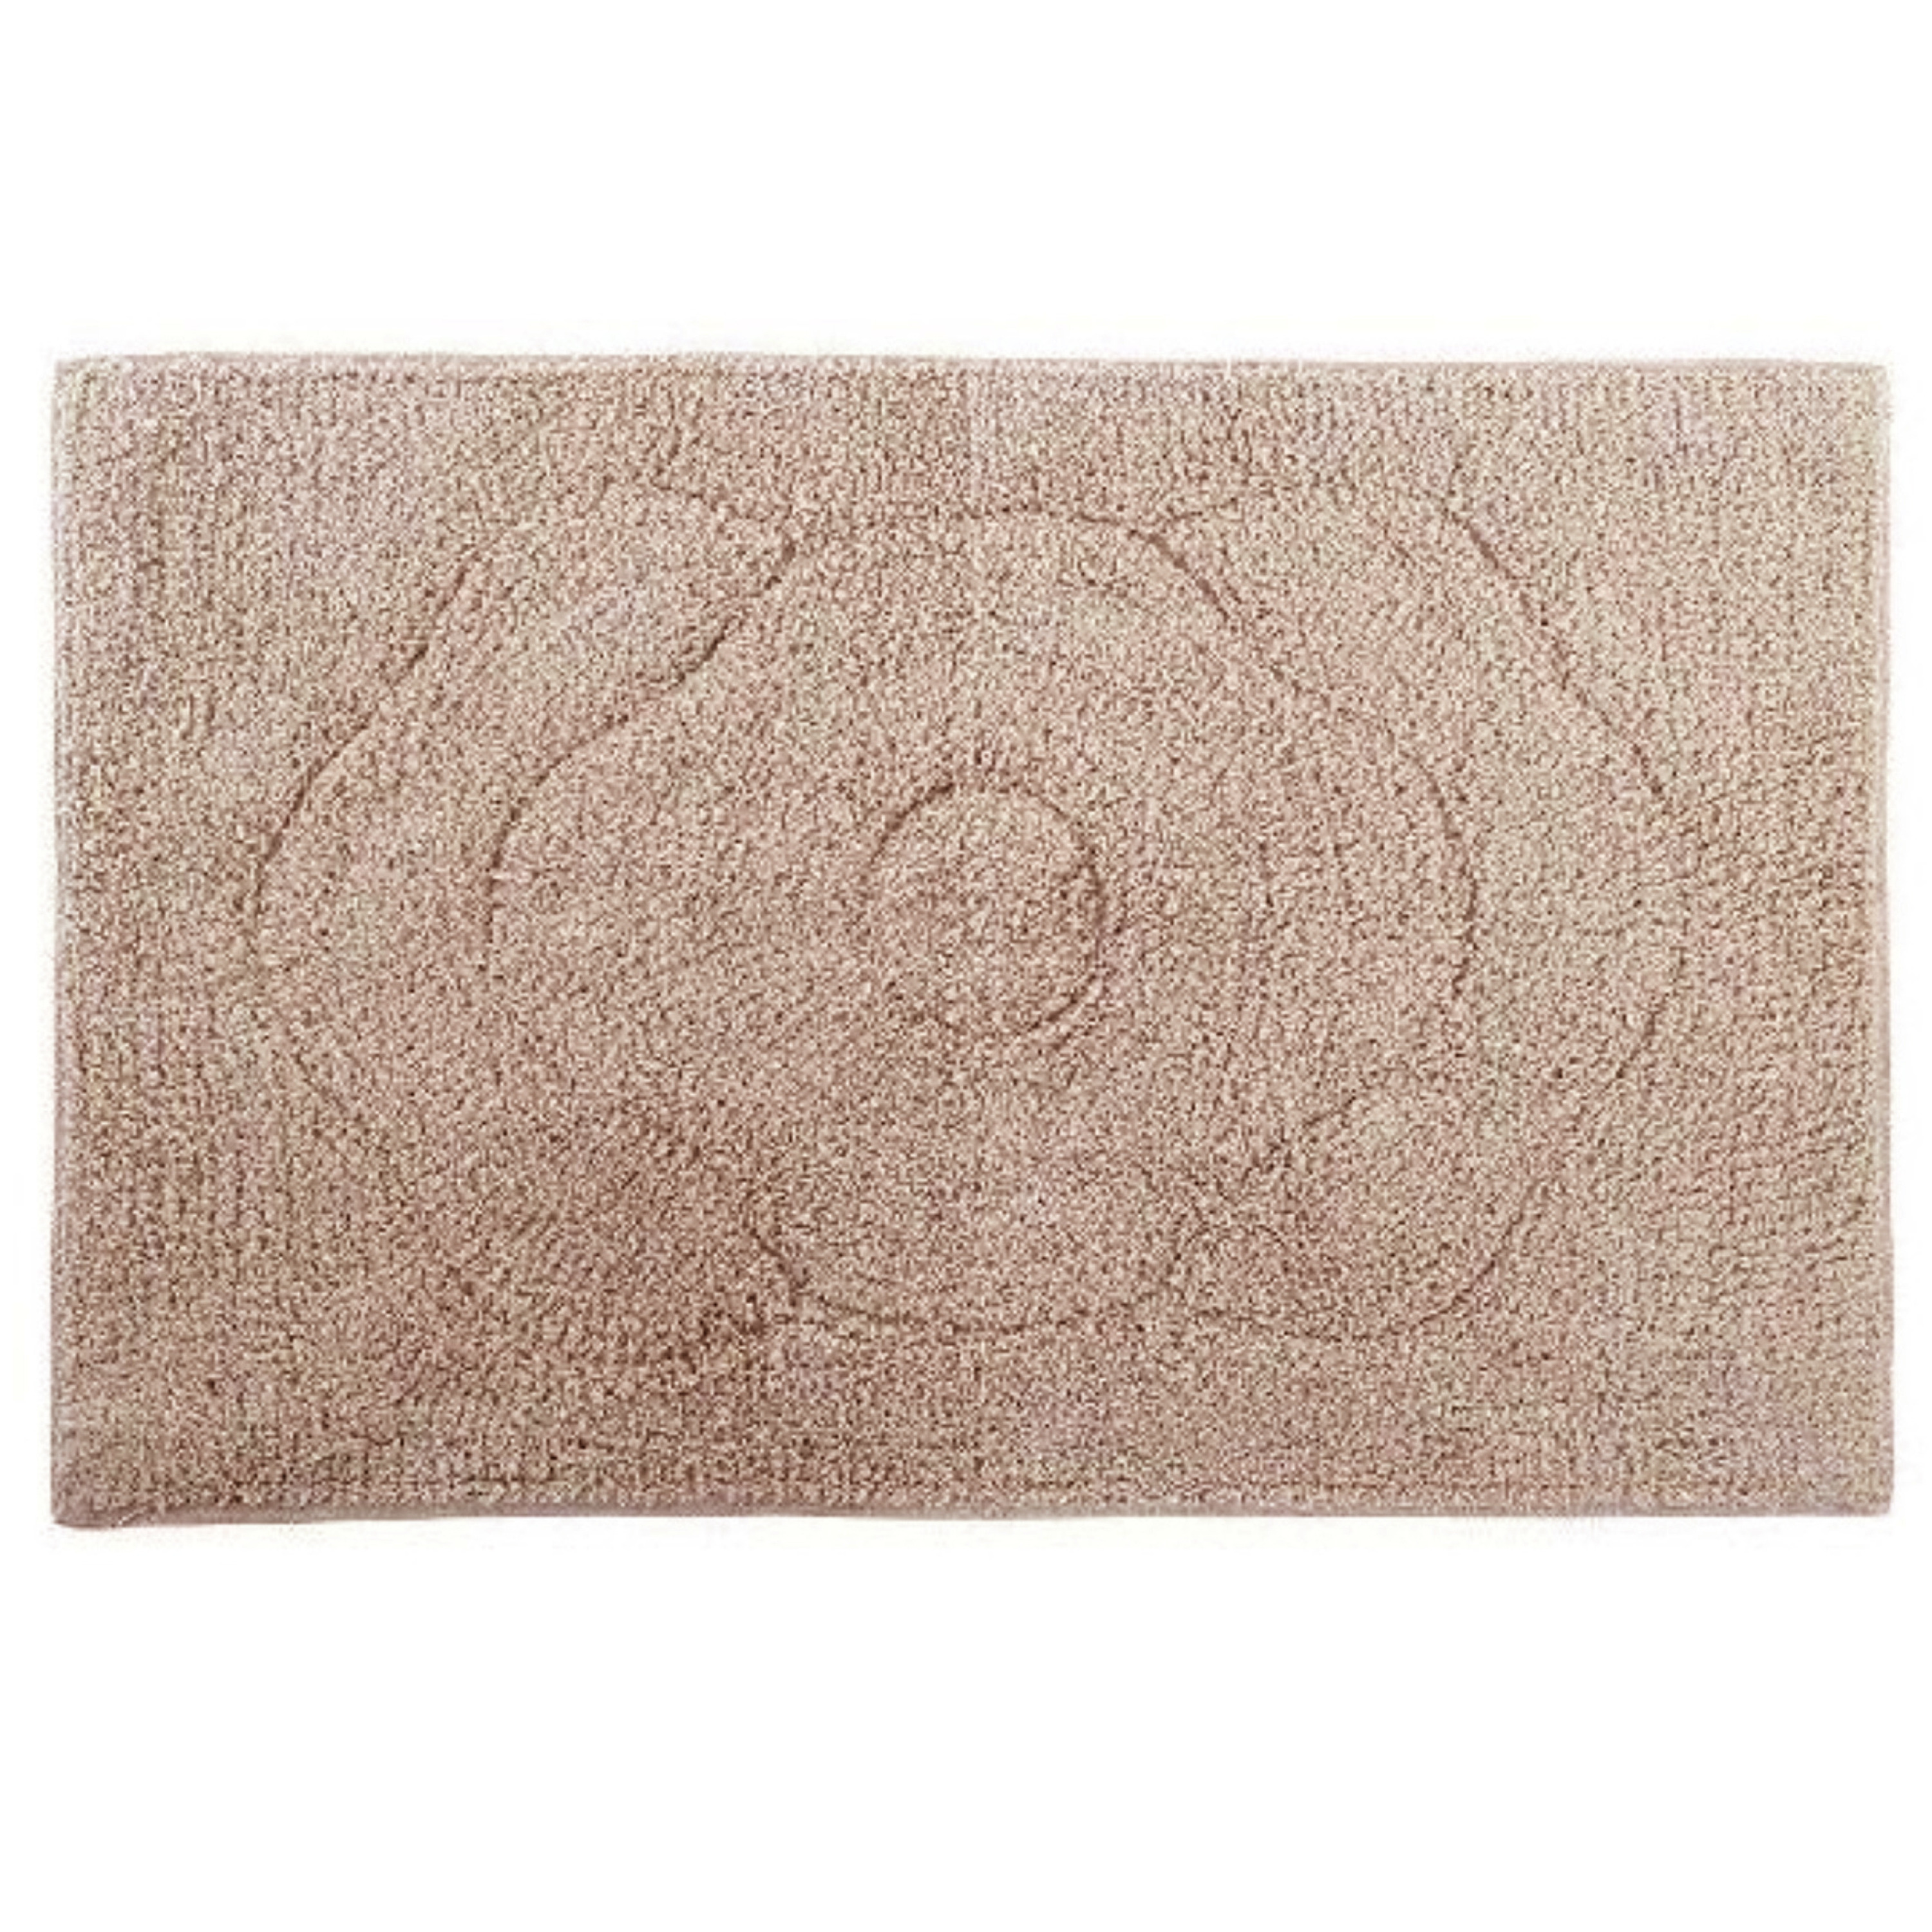 Badmat-badkamerkleed taupe 80 x 50 cm rechthoekig